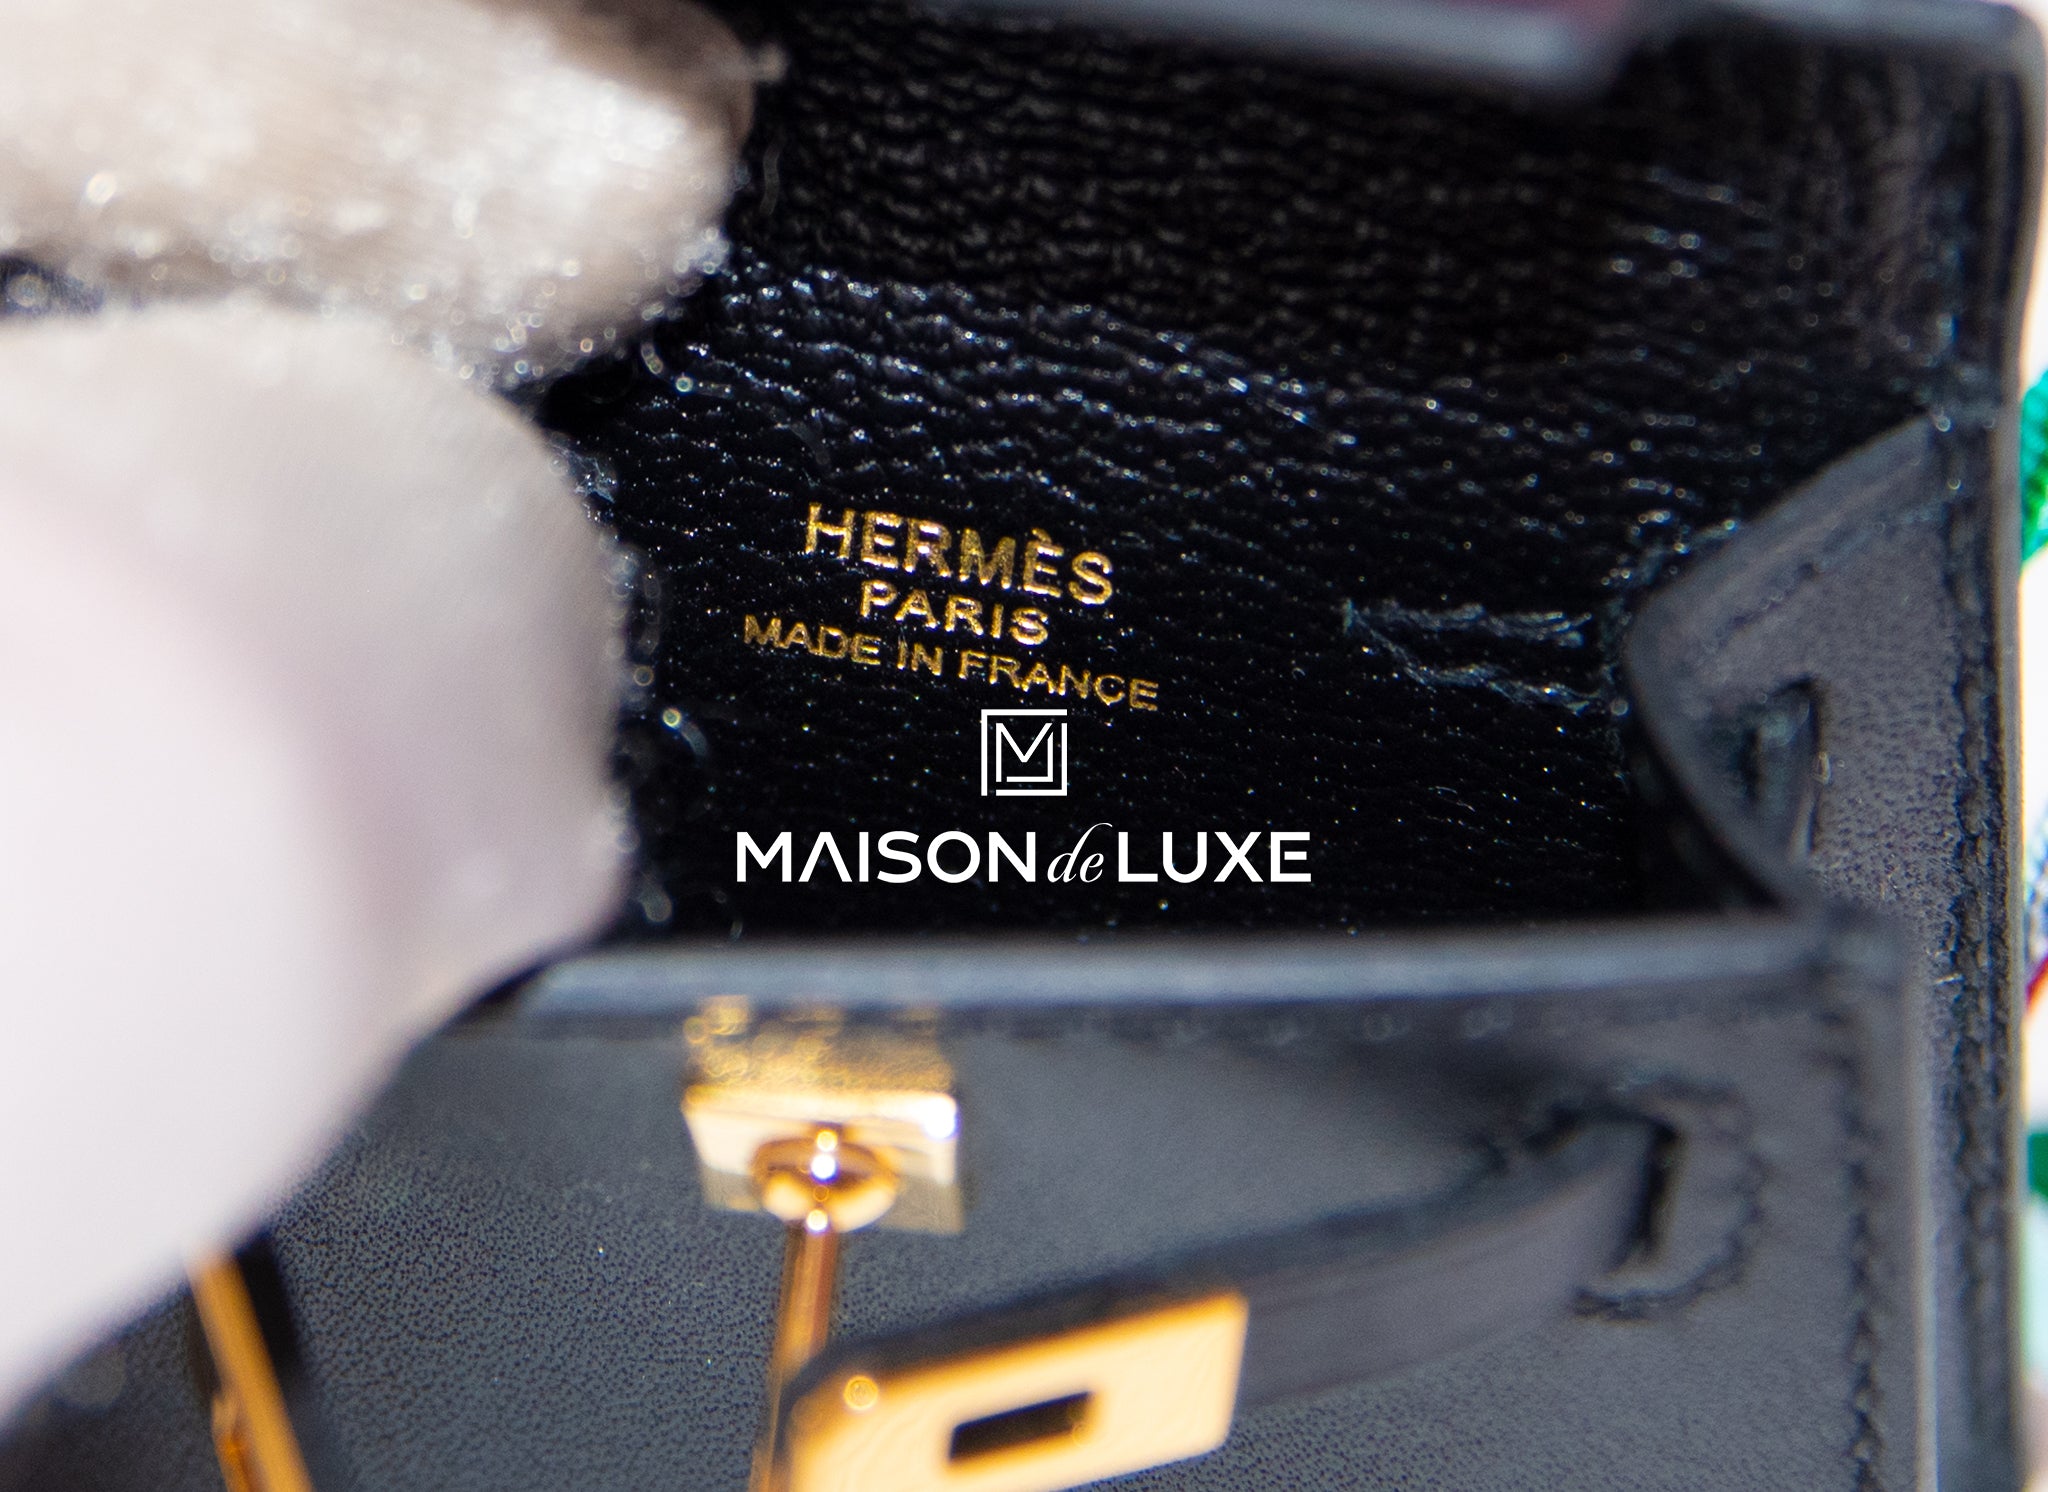 Introducing the new Hermès Micro Kelly Bag Charm - BagAddicts